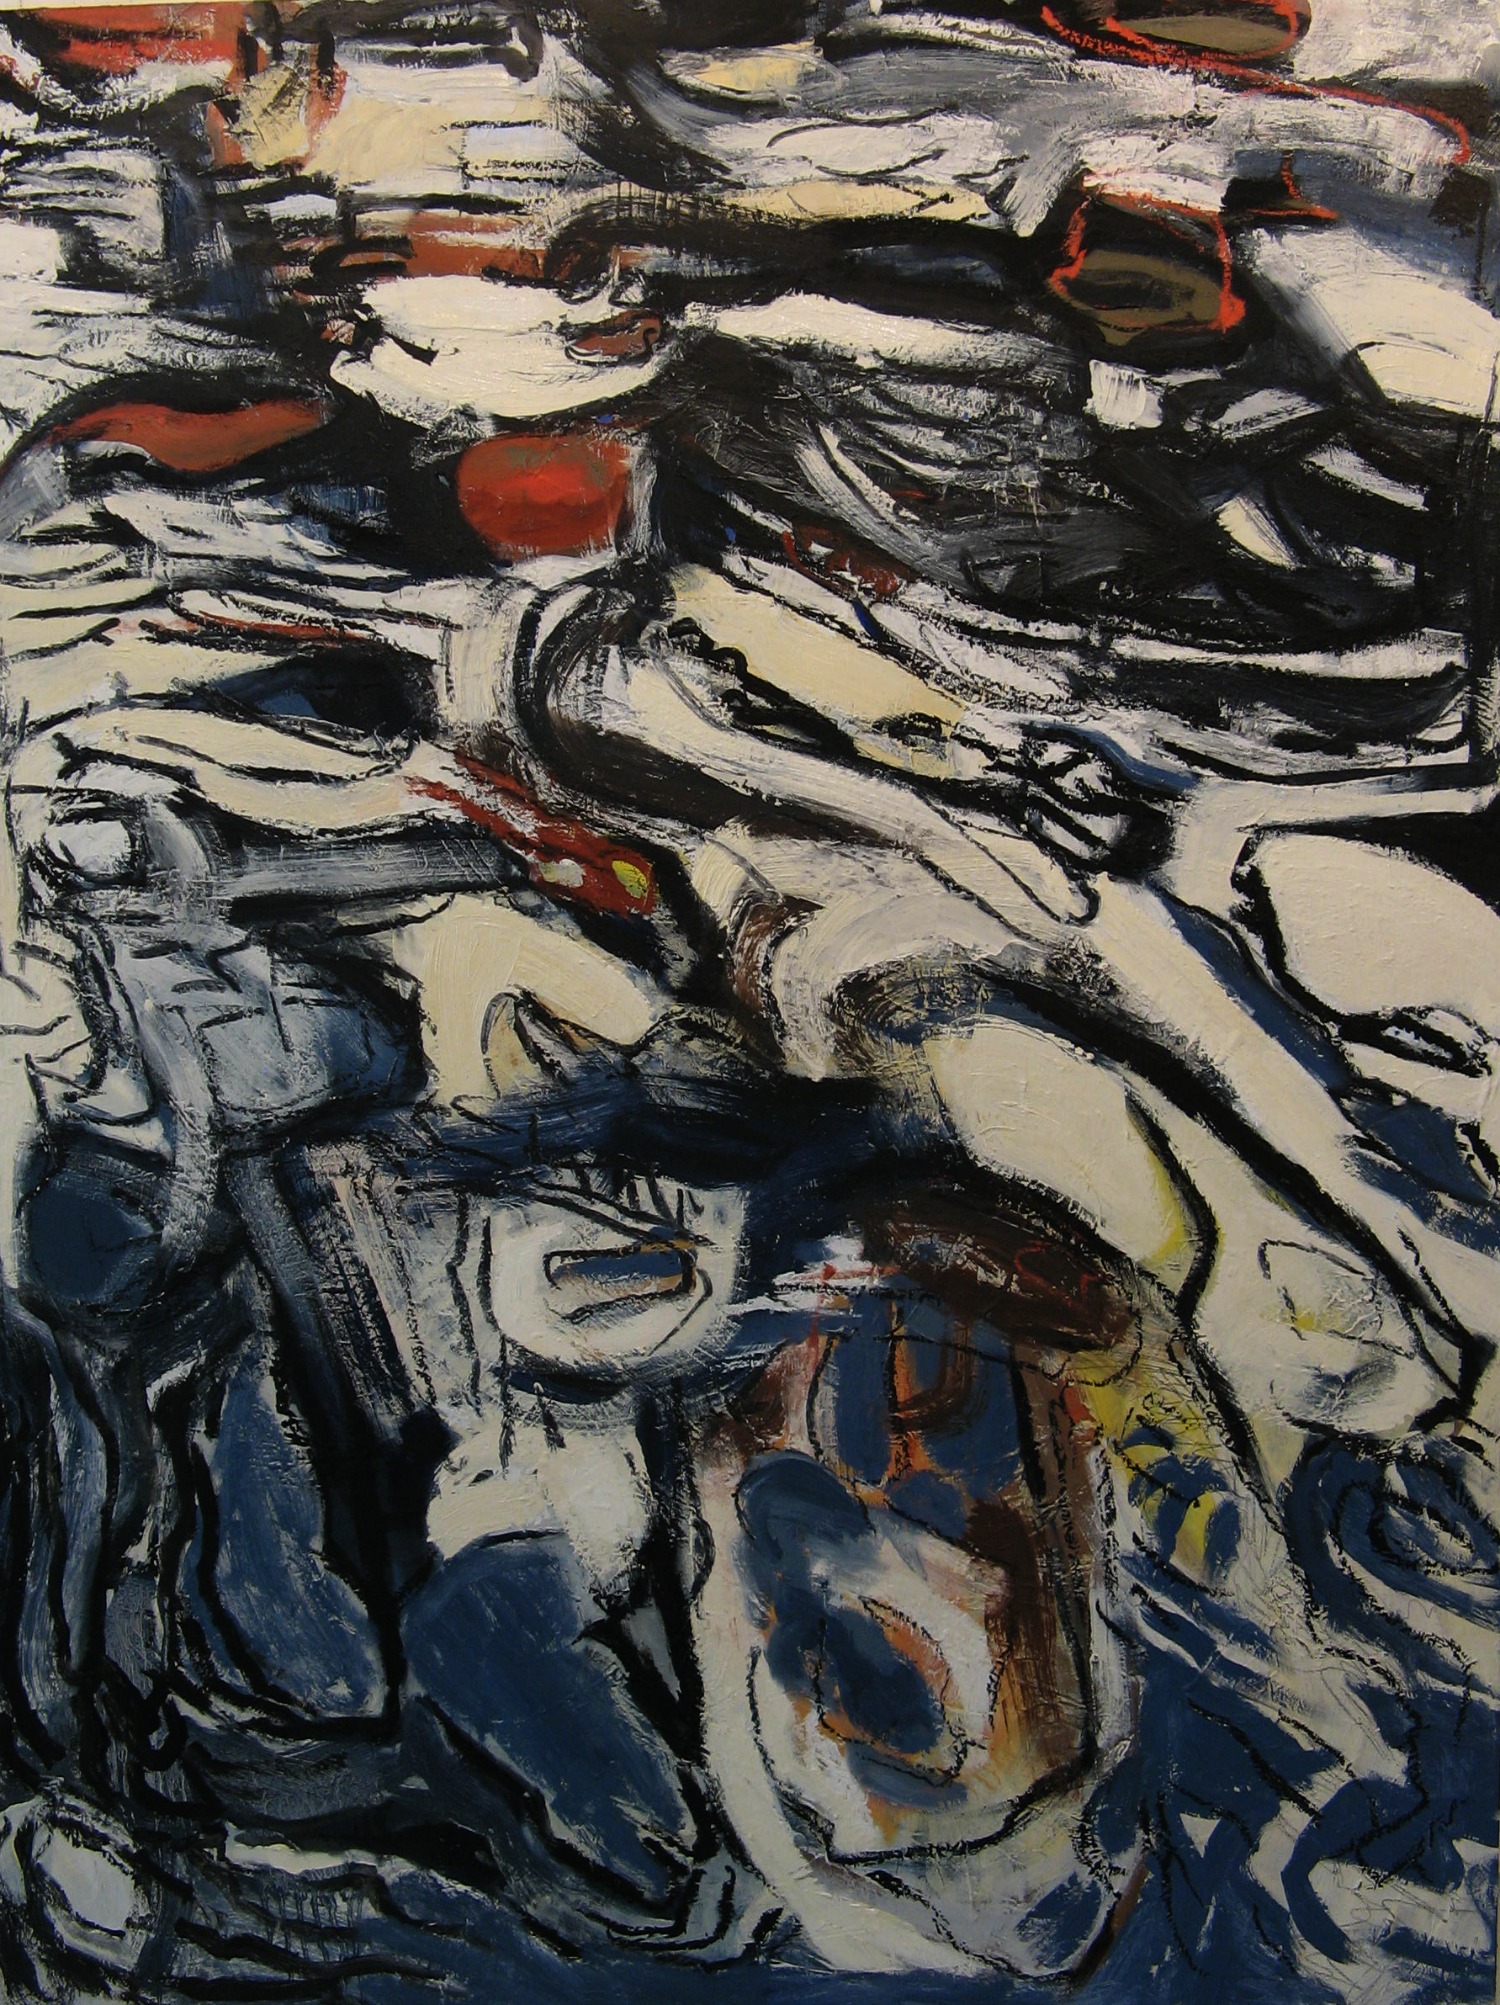   Drift , Oil on canvas, 56x42   